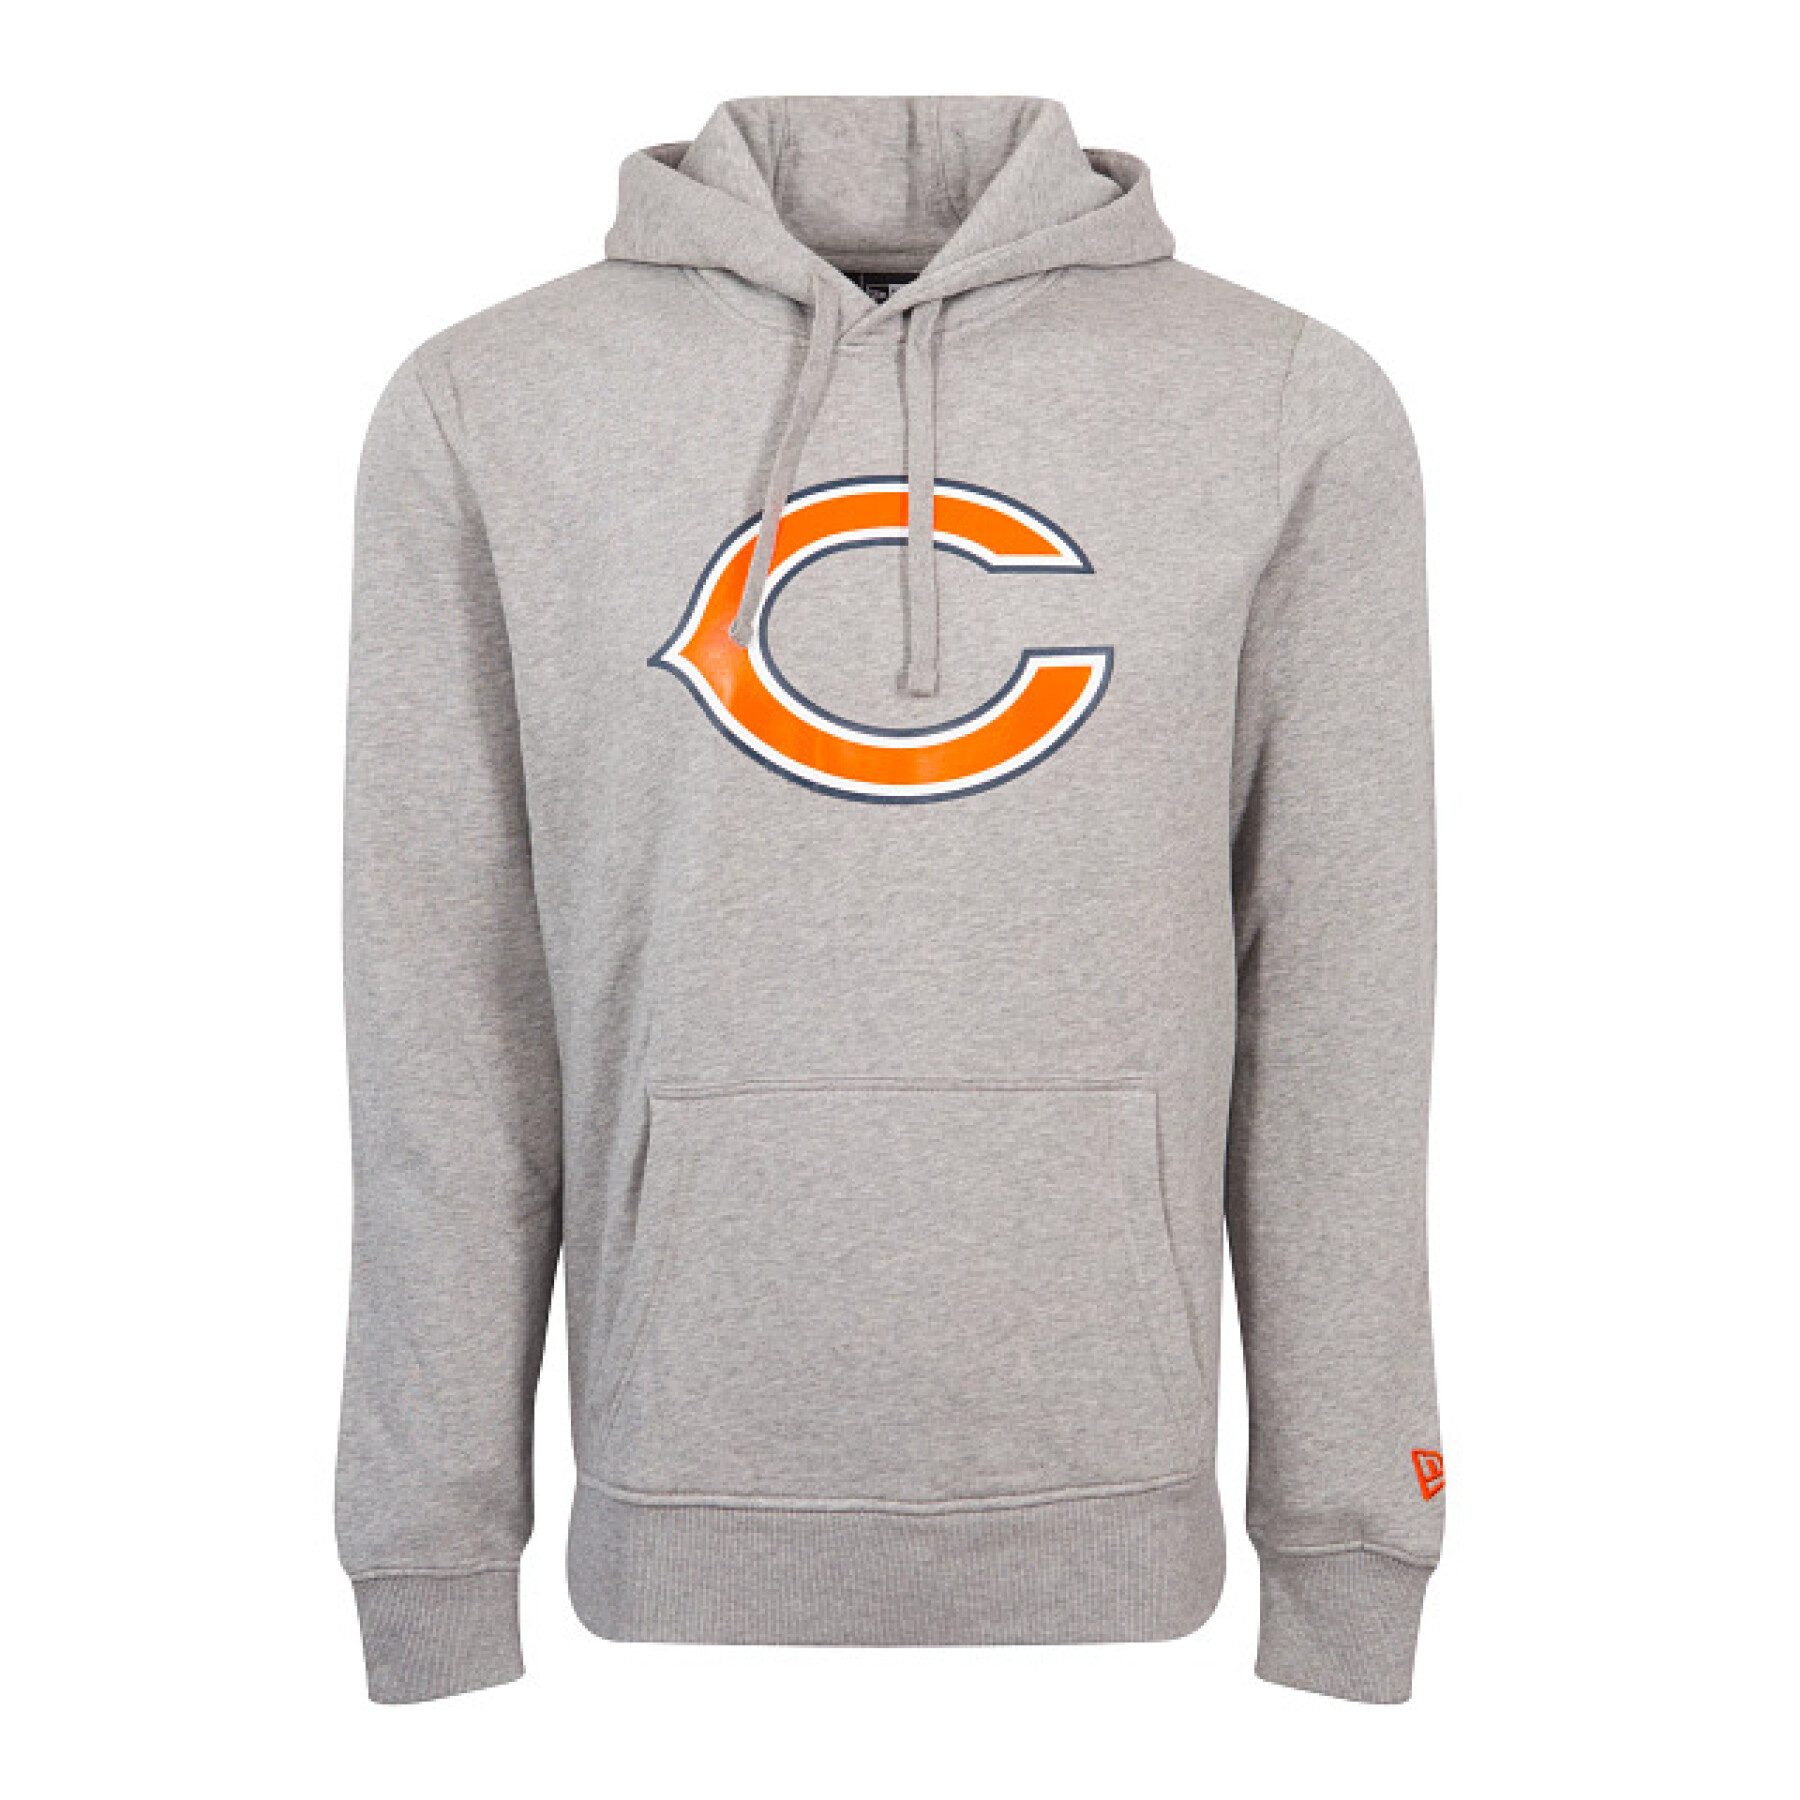 Hooded sweatshirt Chicago Bears NFL